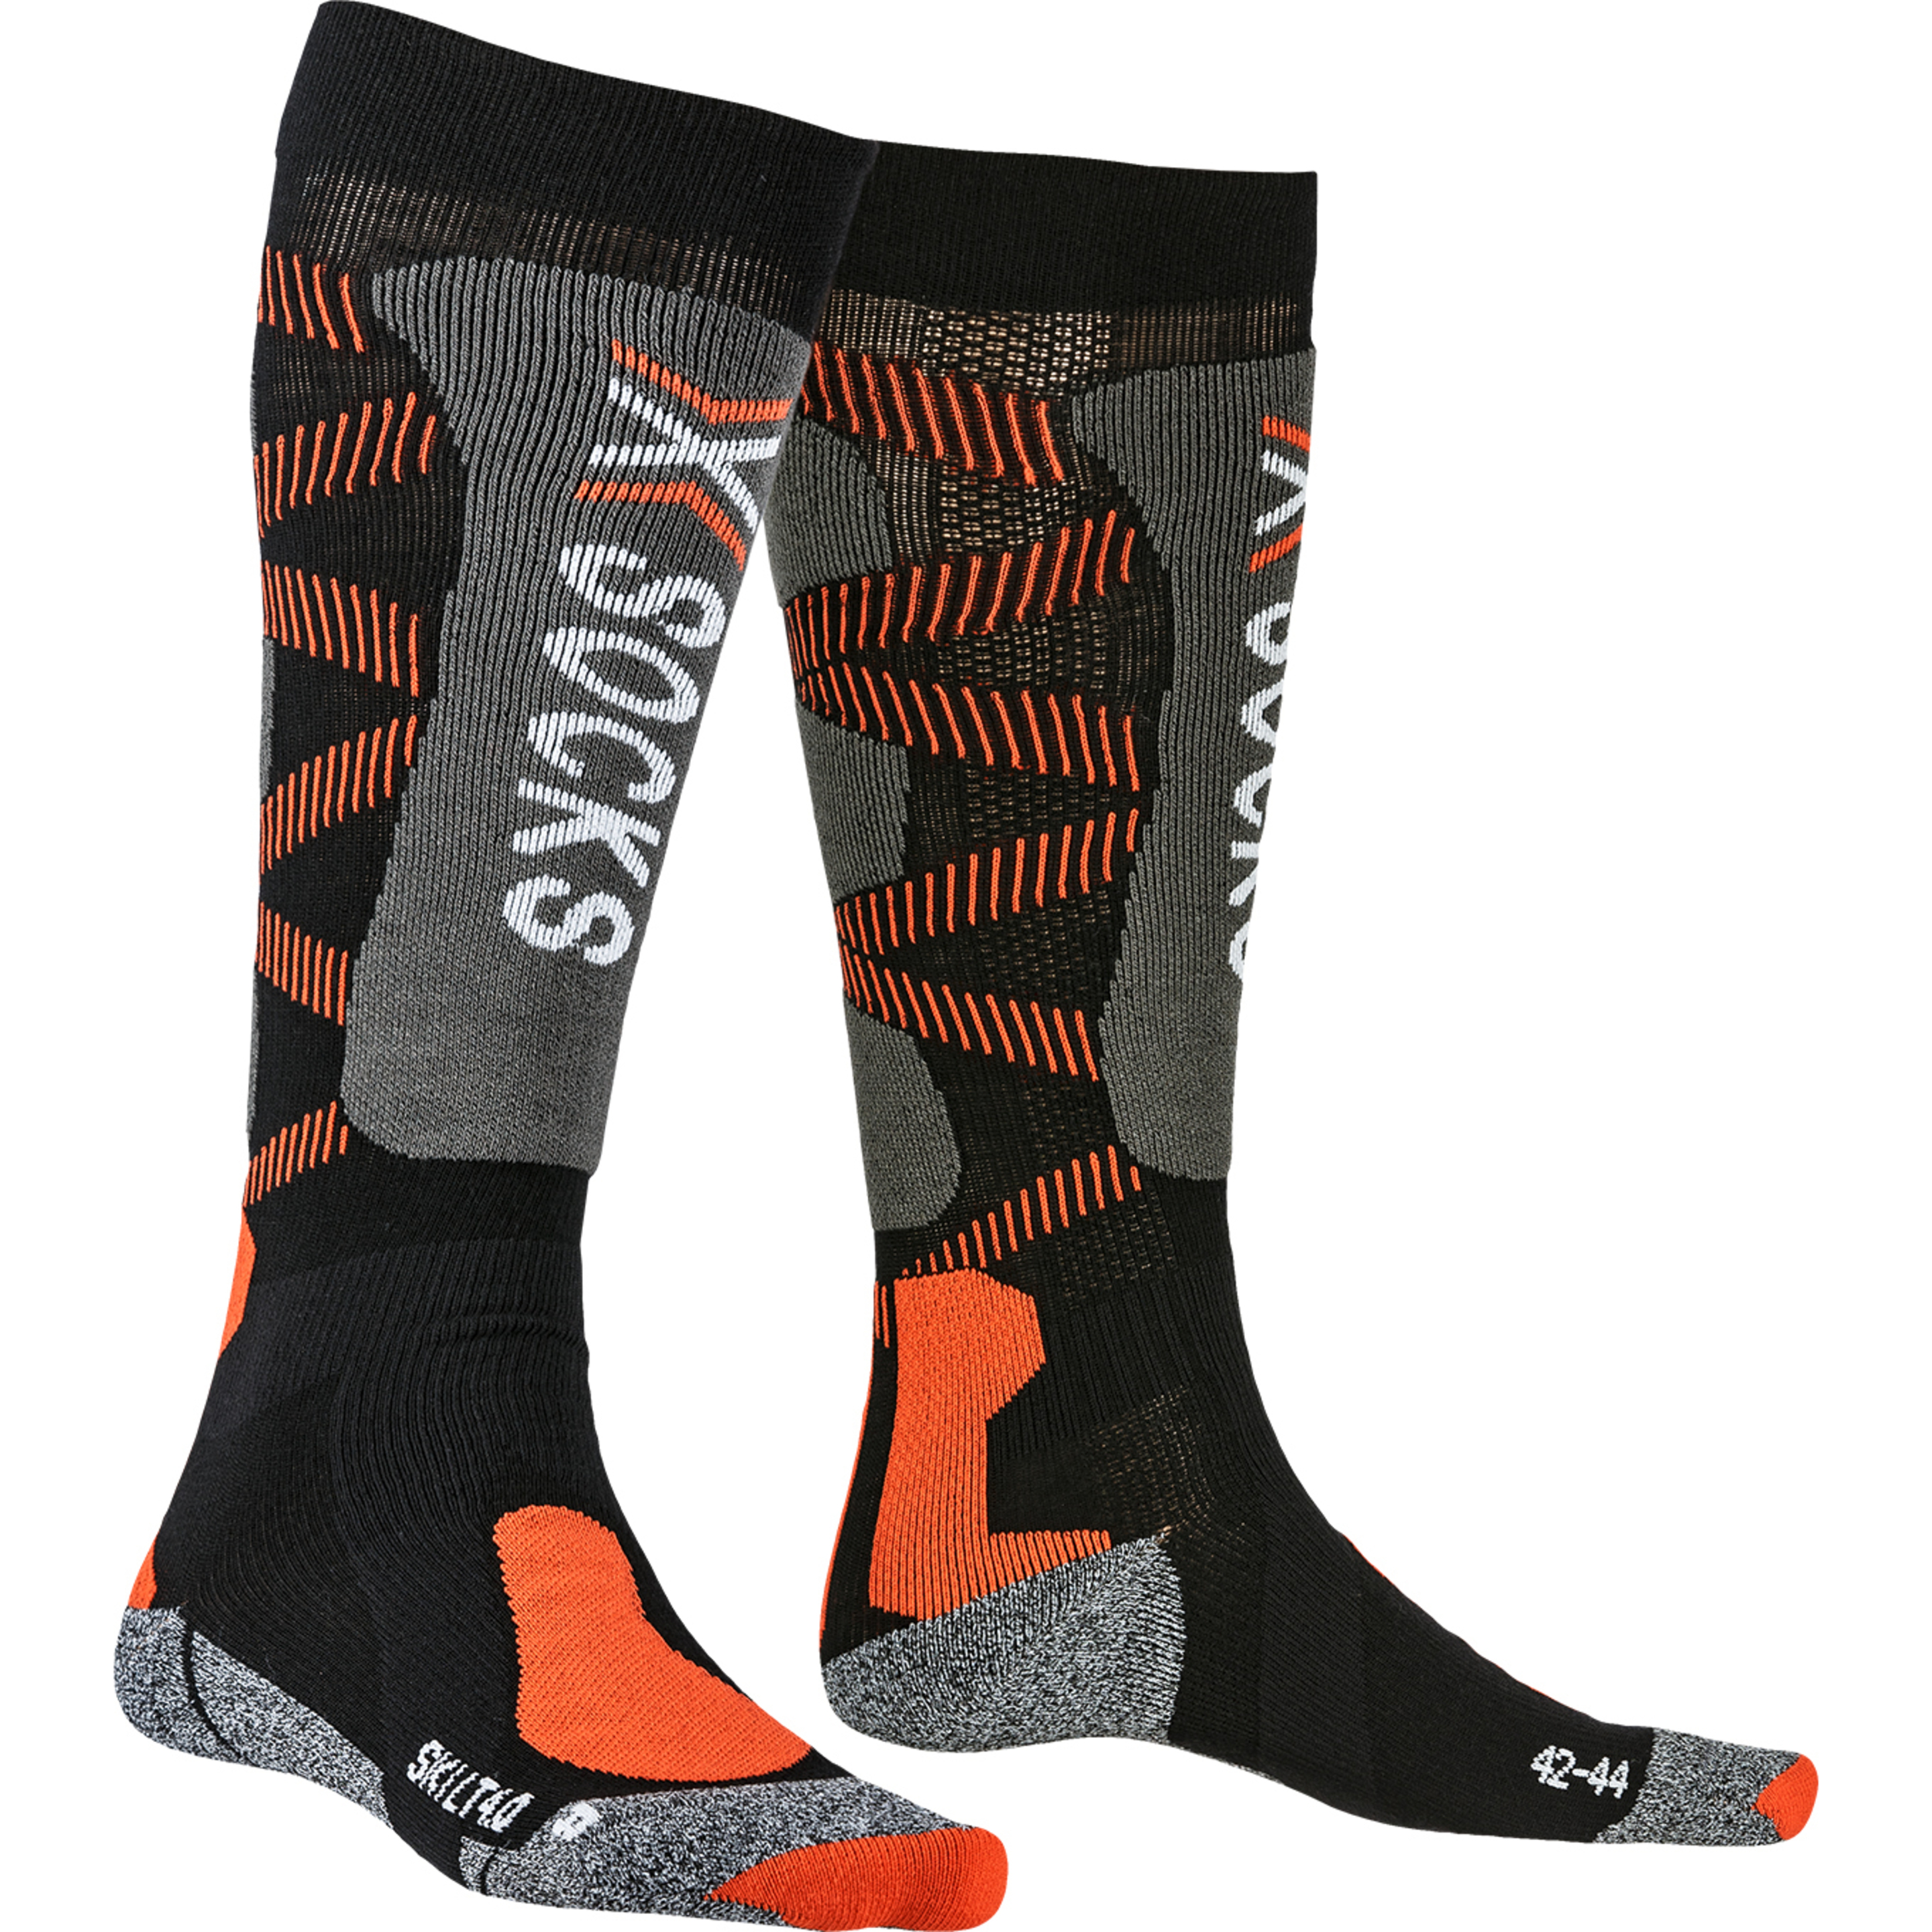 Calcetin Ski Lt 4.0  X-socks - Negro  MKP